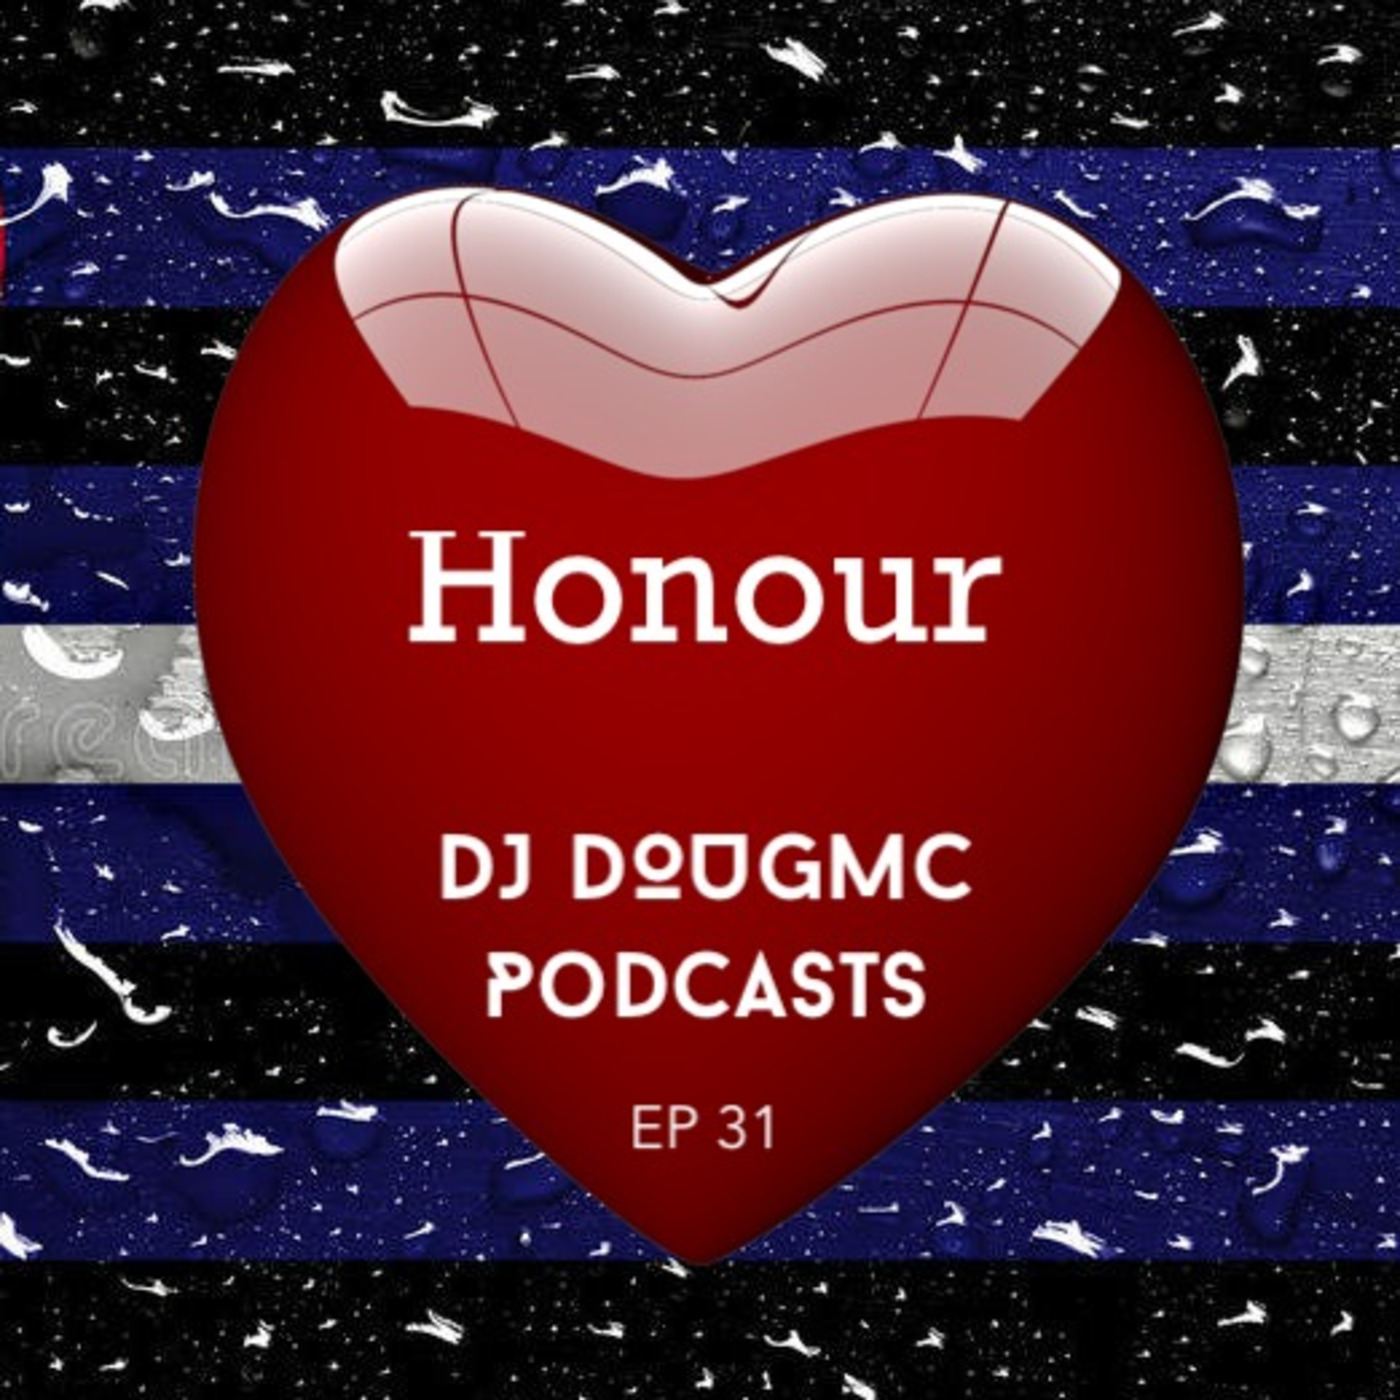 Dougmc podcasts